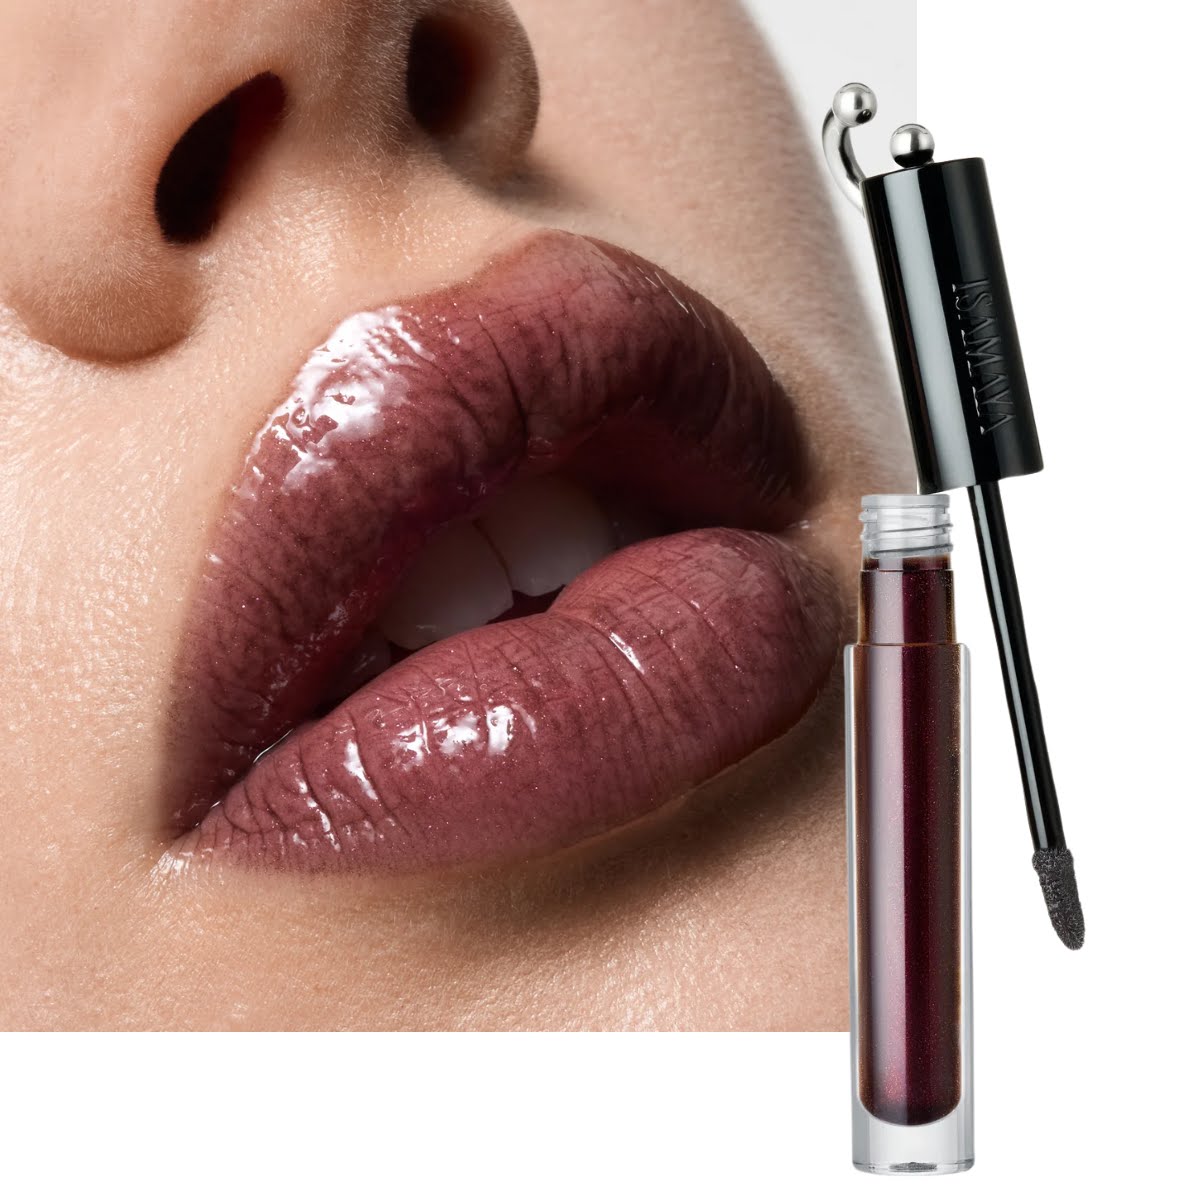 Isamaya Beauty Liplacq Maximizing Lip Serum in Black Veil, €35.30